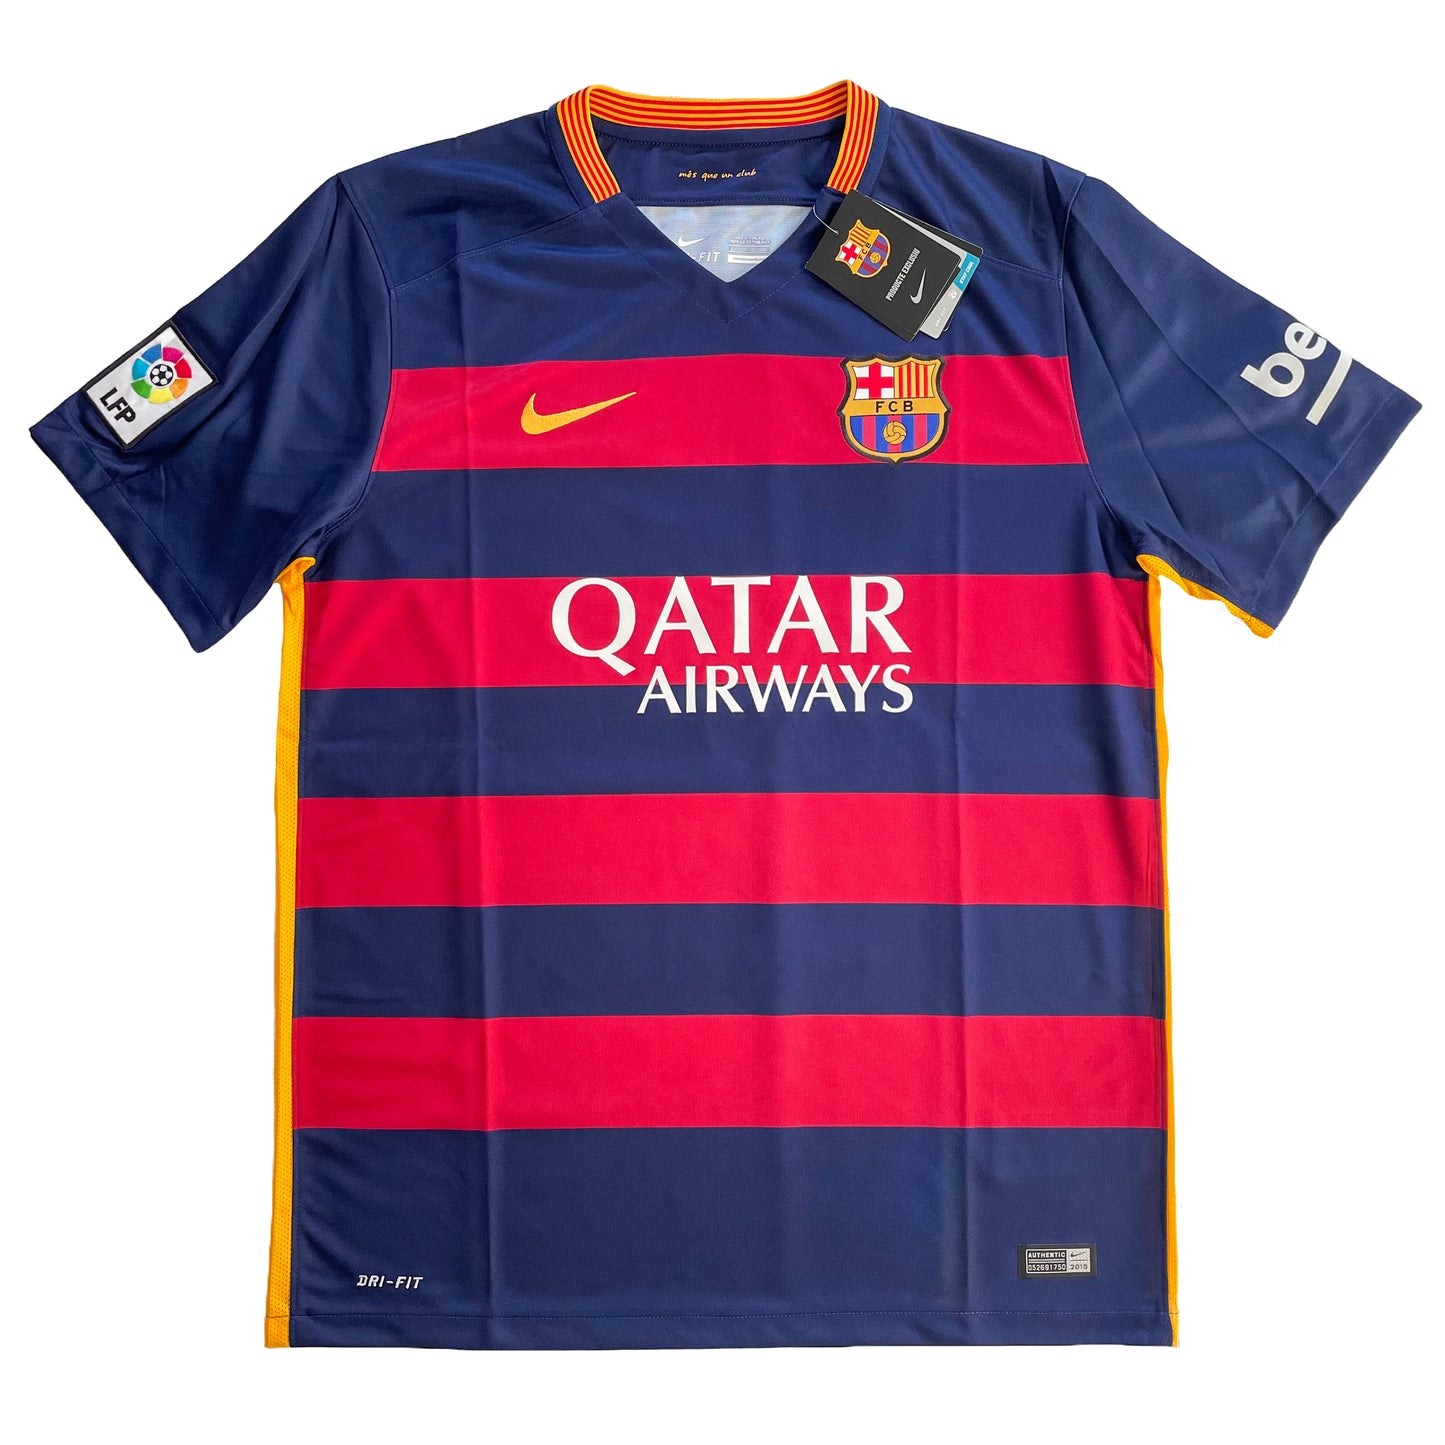 2015-2016 FC Barcelona home shirt #10 Messi (M)